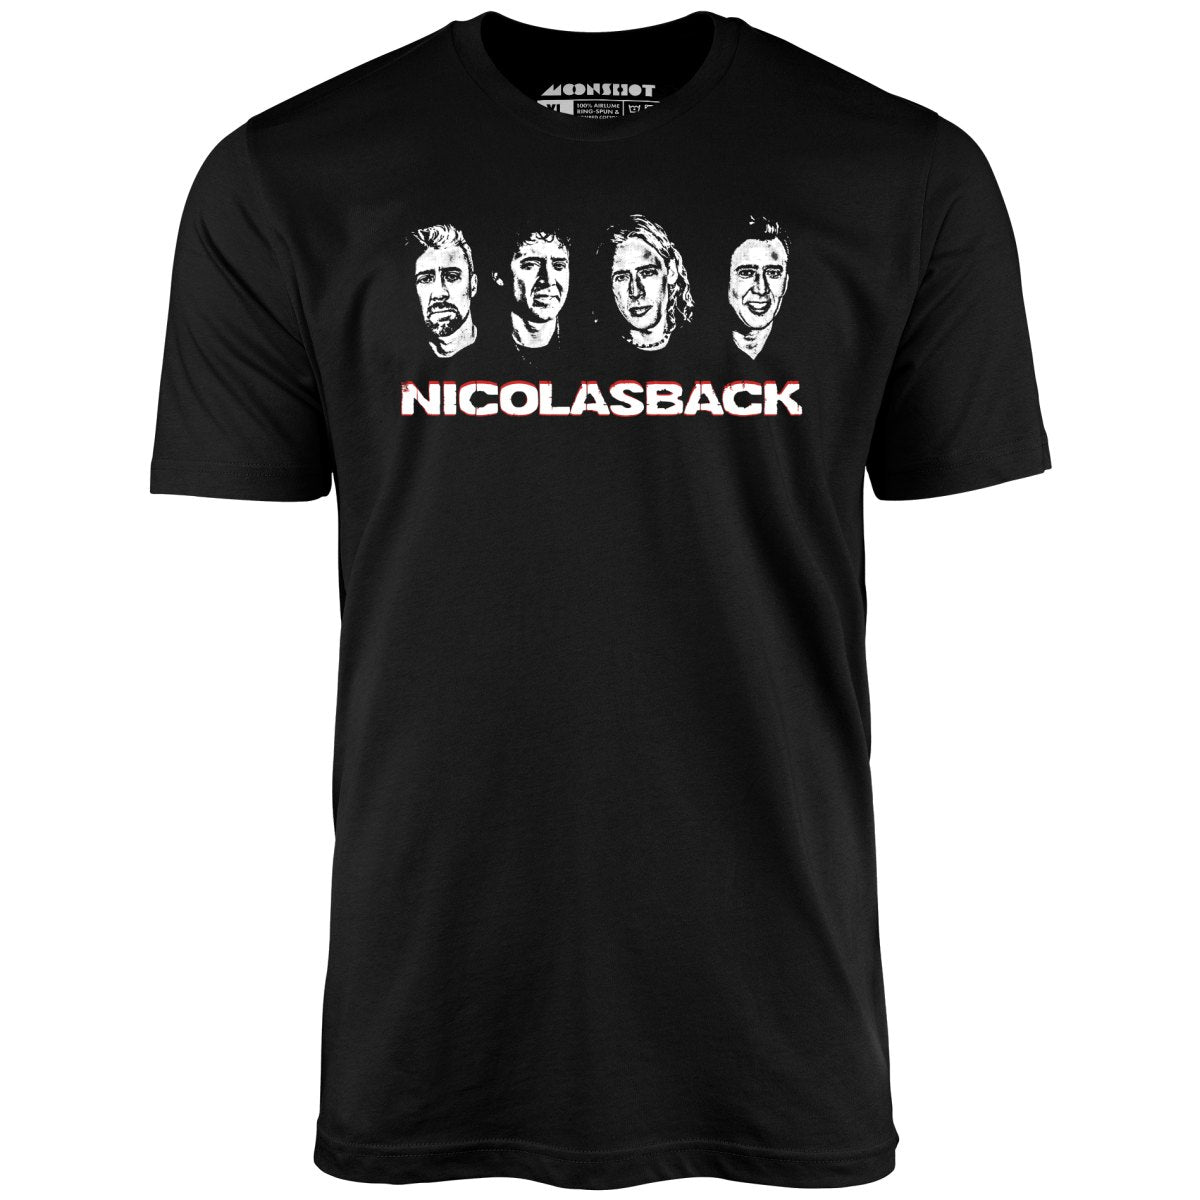 Nicolasback - Nickelback Nicolas Cage Mashup - Unisex T-Shirt